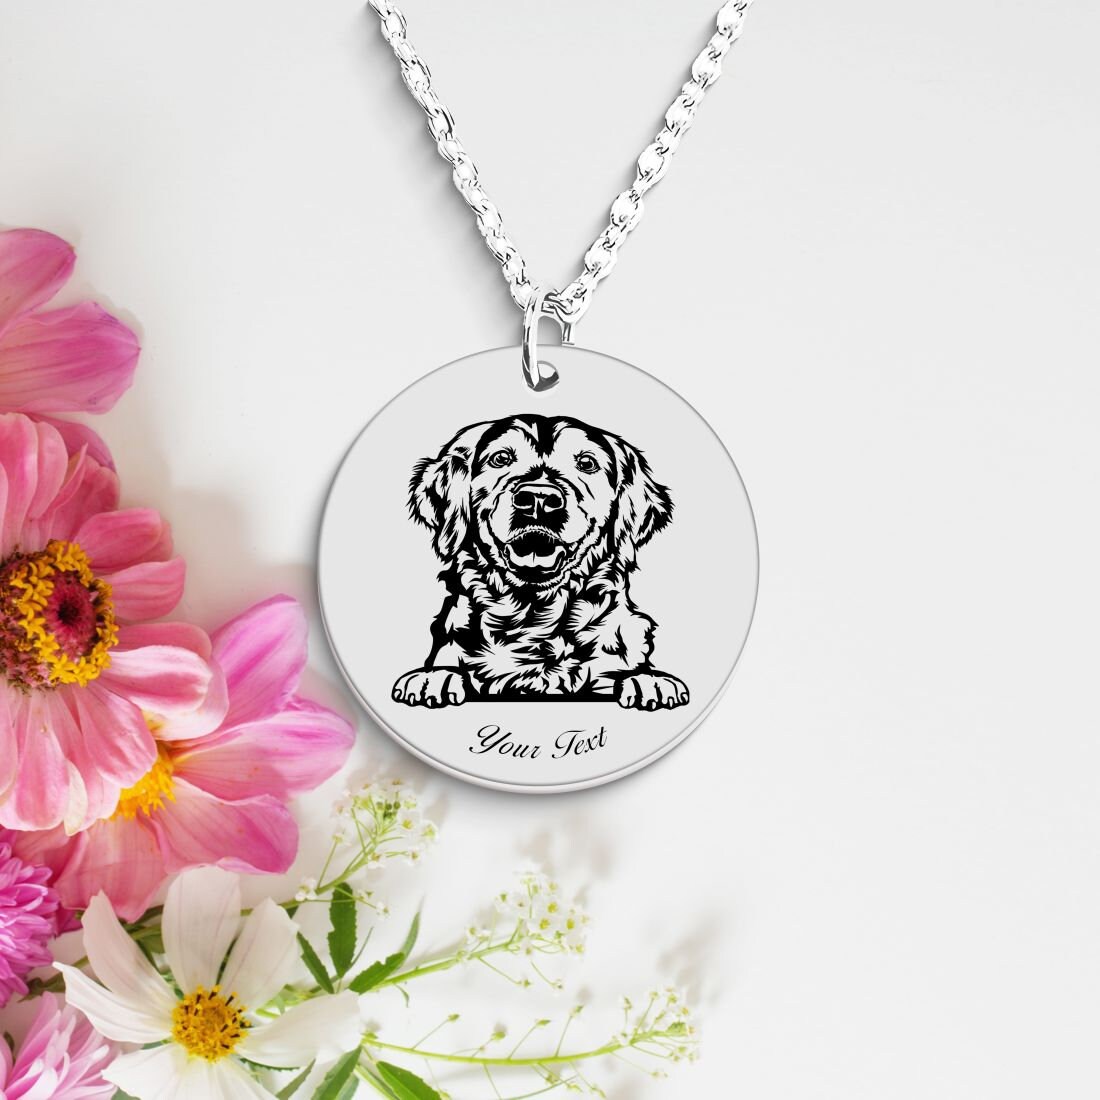 Golden Retriever Dog Portrait Necklace - Personalizable Jewelry